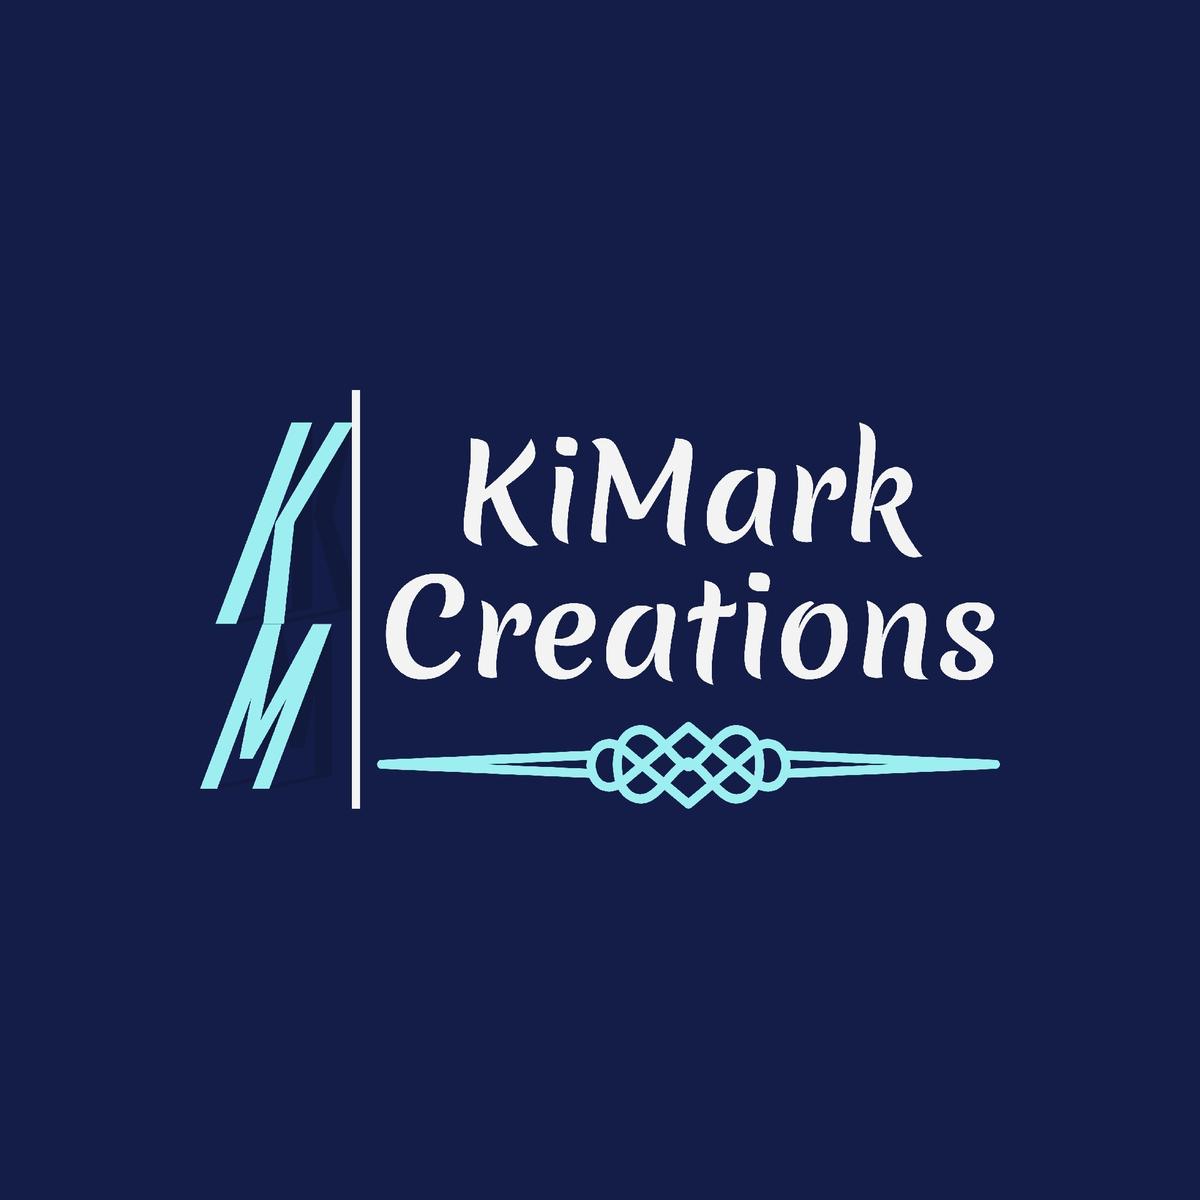 KiMark Creation's images